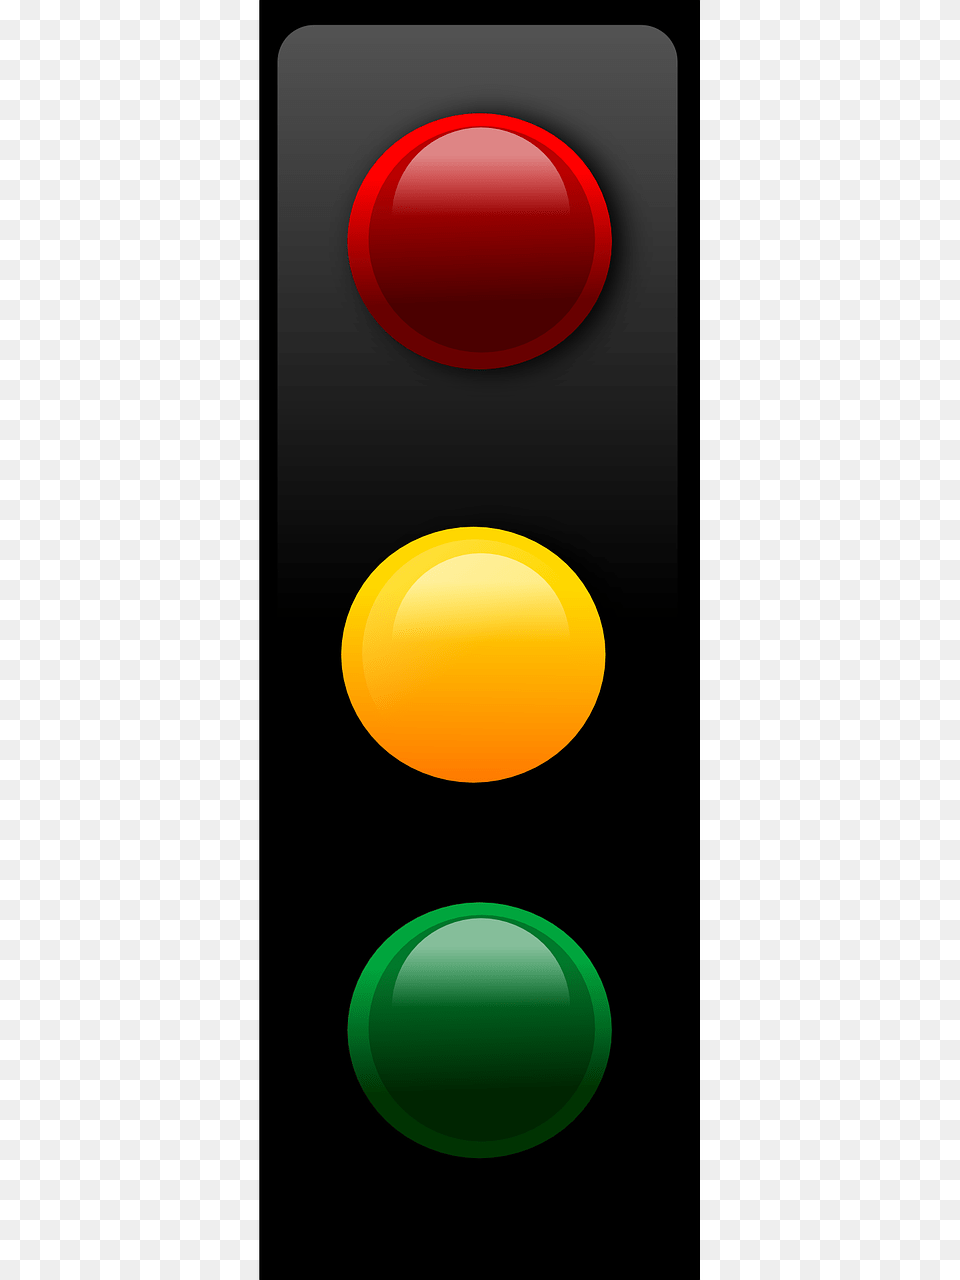 Traffic Light Images, Traffic Light Png Image